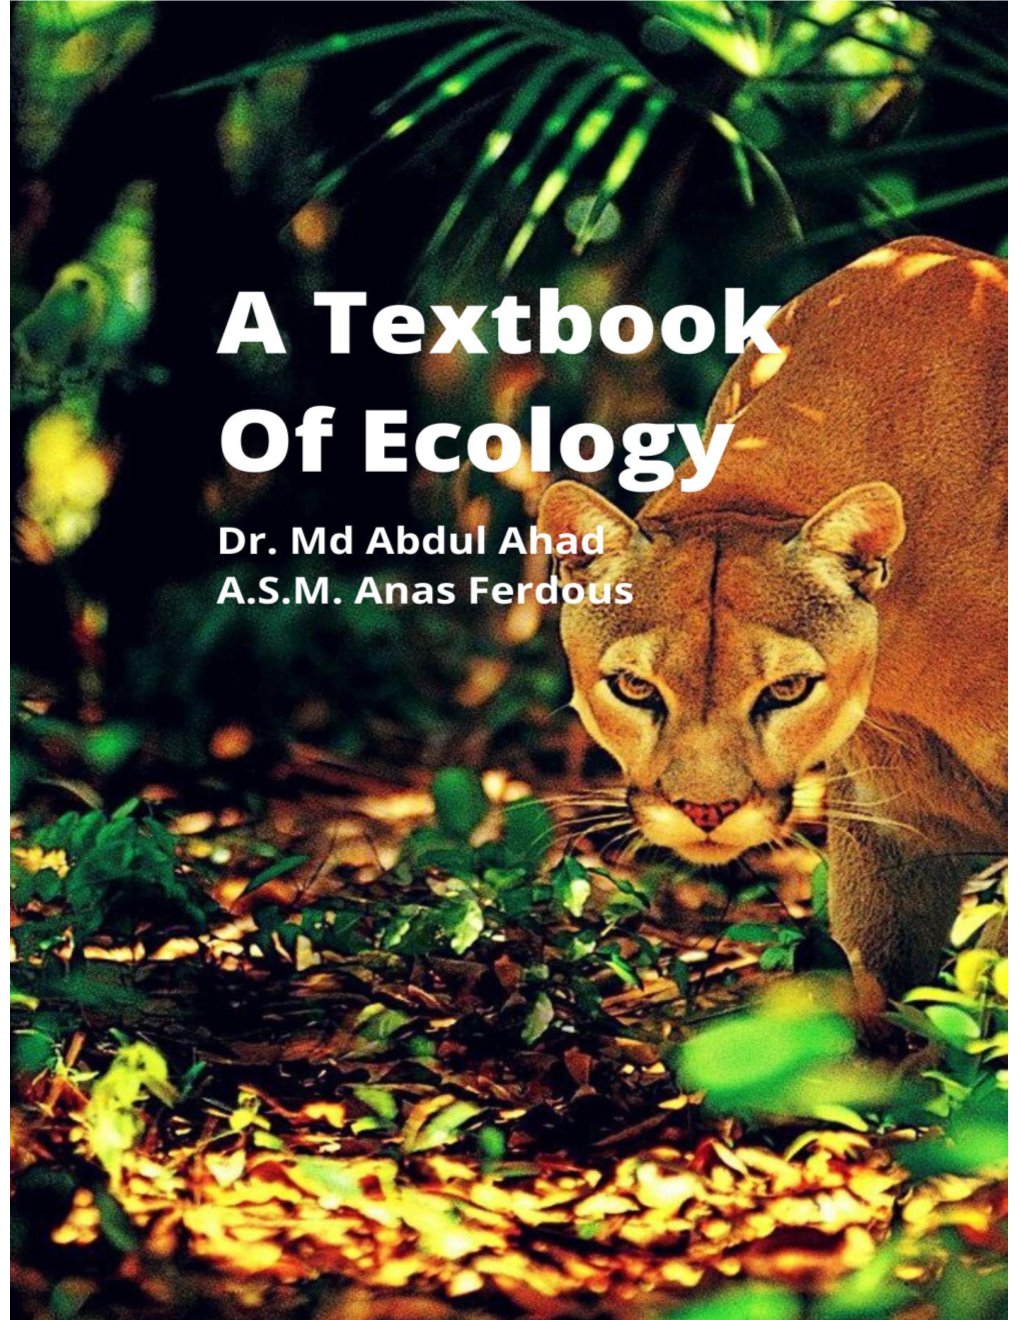 A Textbook of Ecology